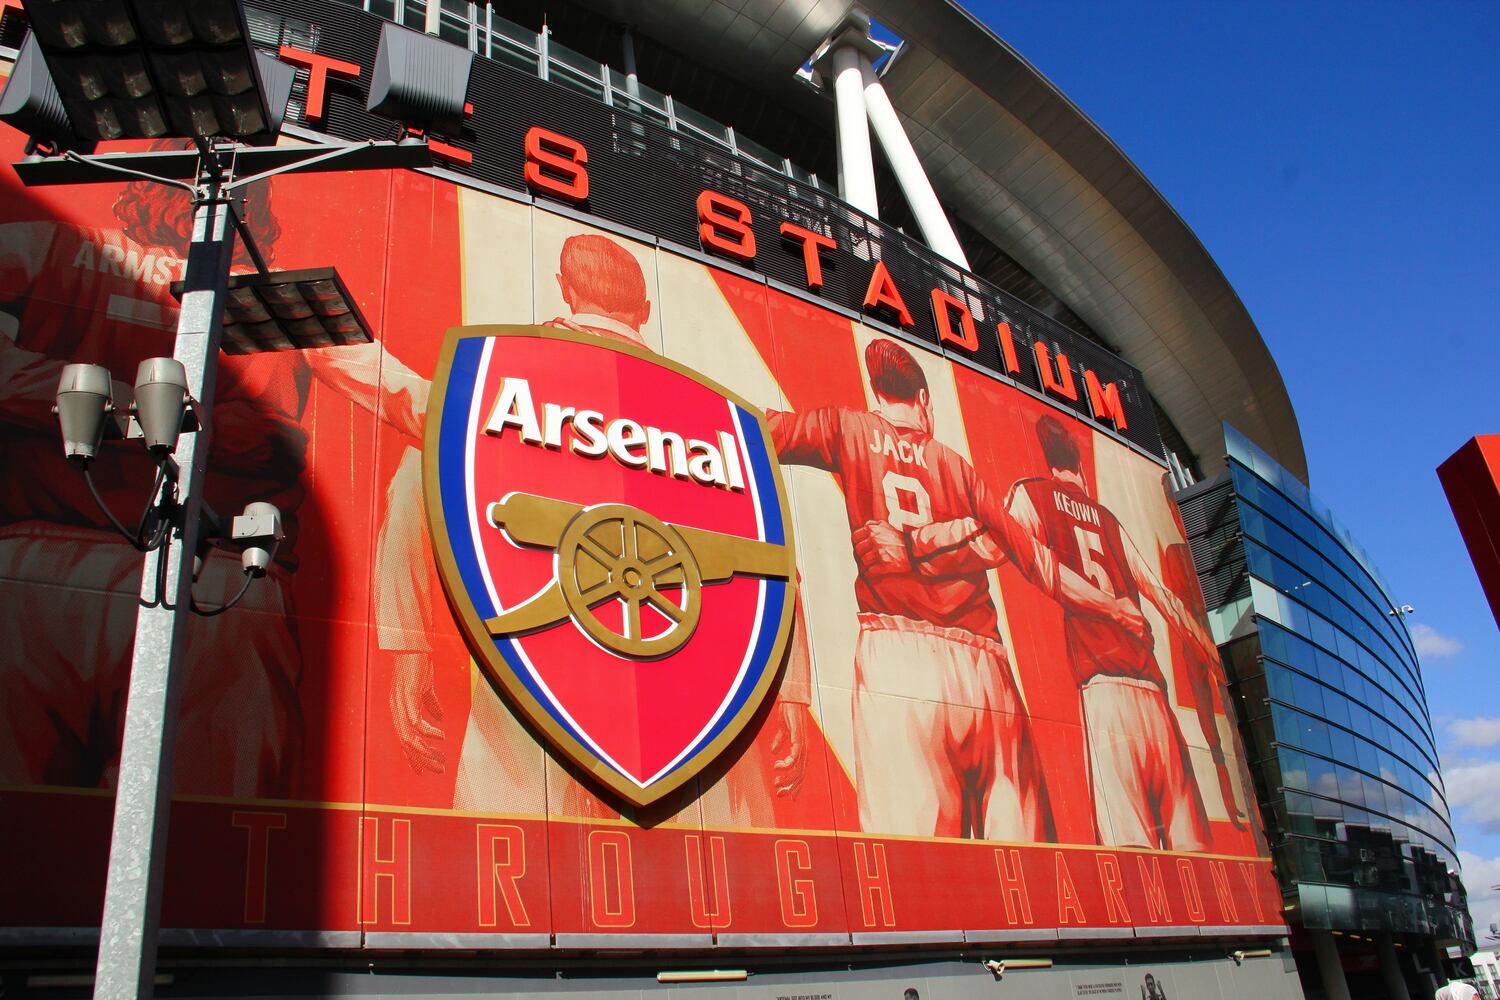 Arsenal FC Fan Token Ads Criticized by UK Regulator ...